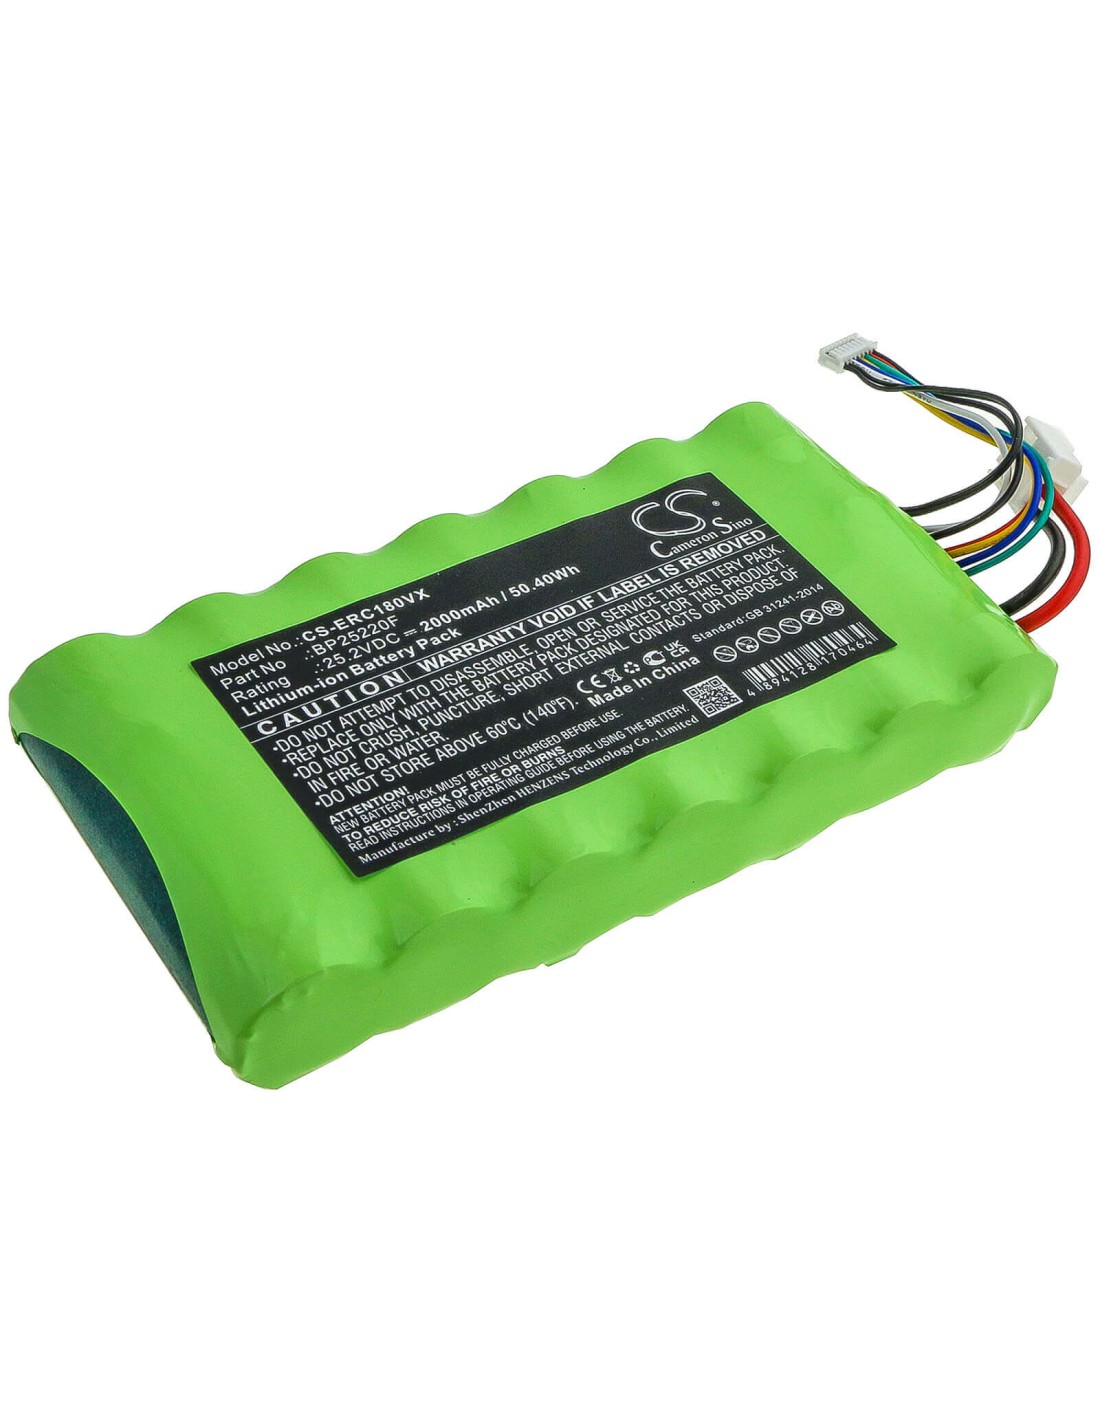 25.2V, Li-ion, 2000mAh, Battery fits Eureka, Nec180 Pro, 50.40Wh